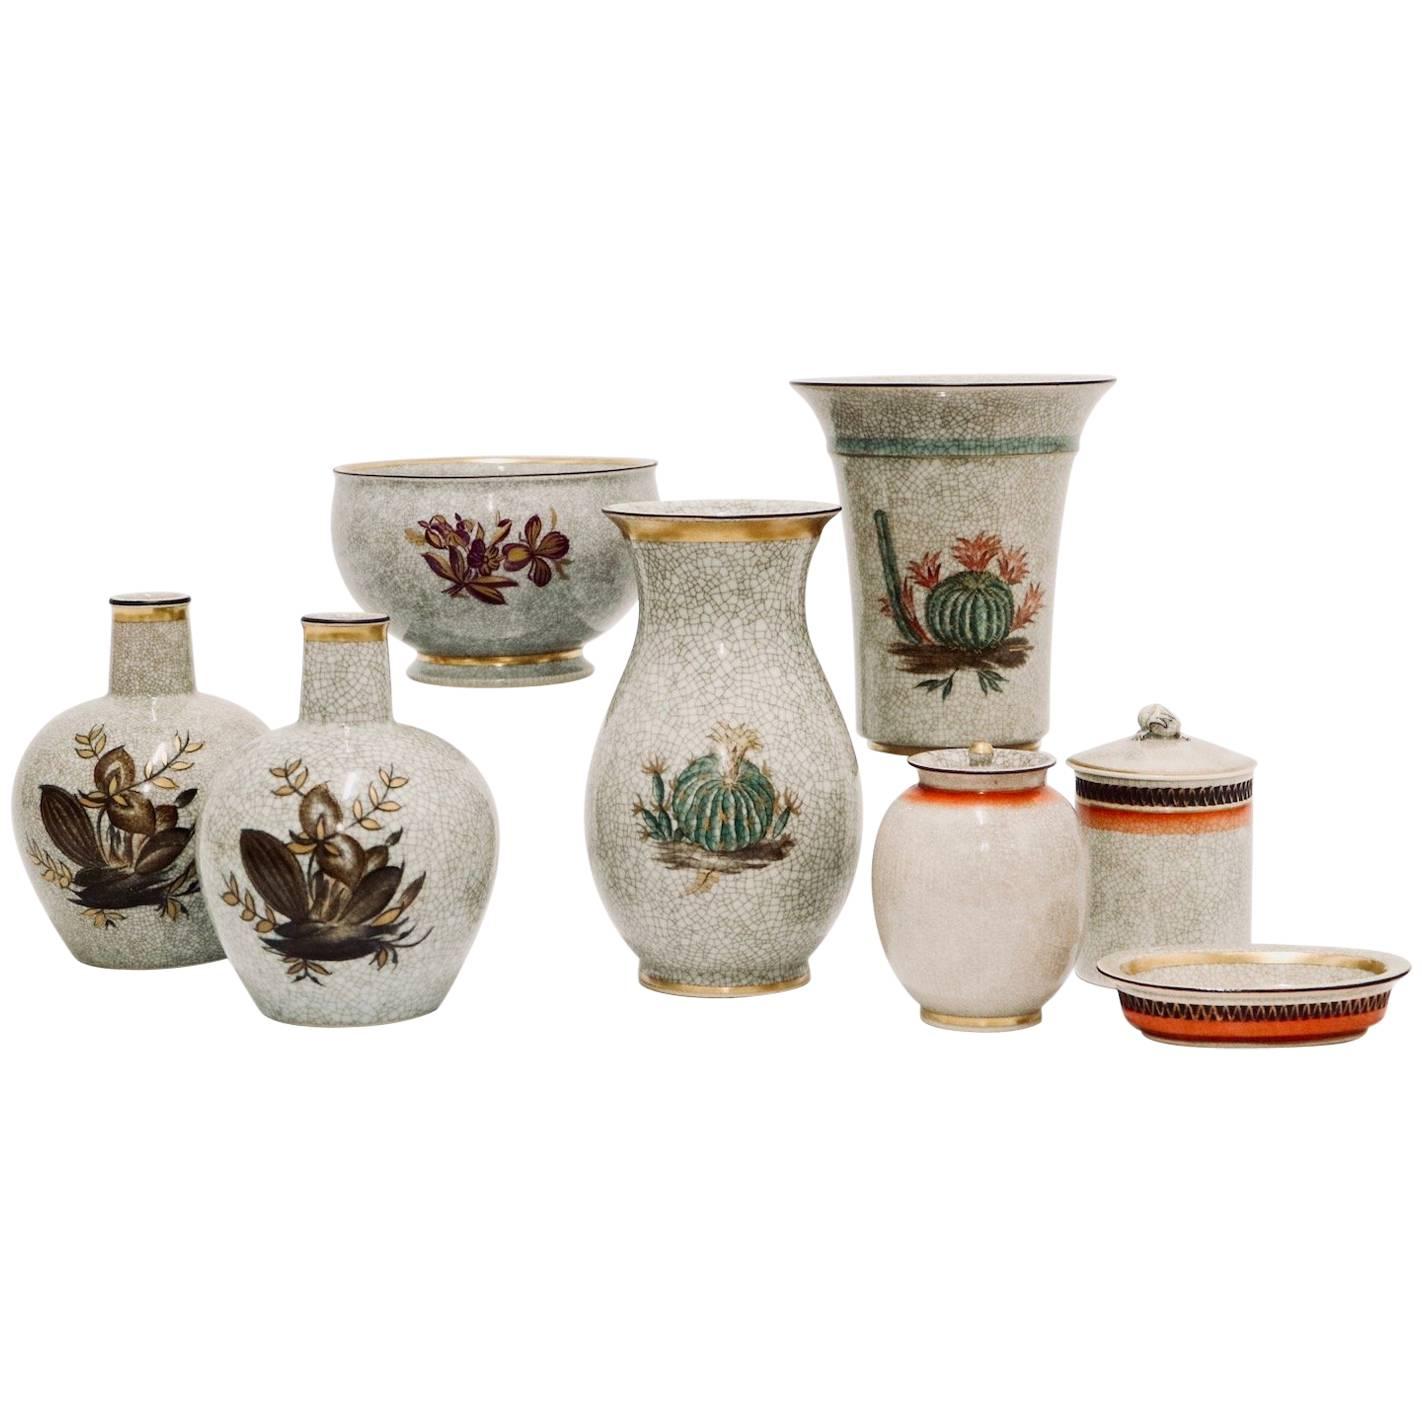 Danish Royal Copenhagen Midcentury Vases in Crackle Finish Porcelain, Signed